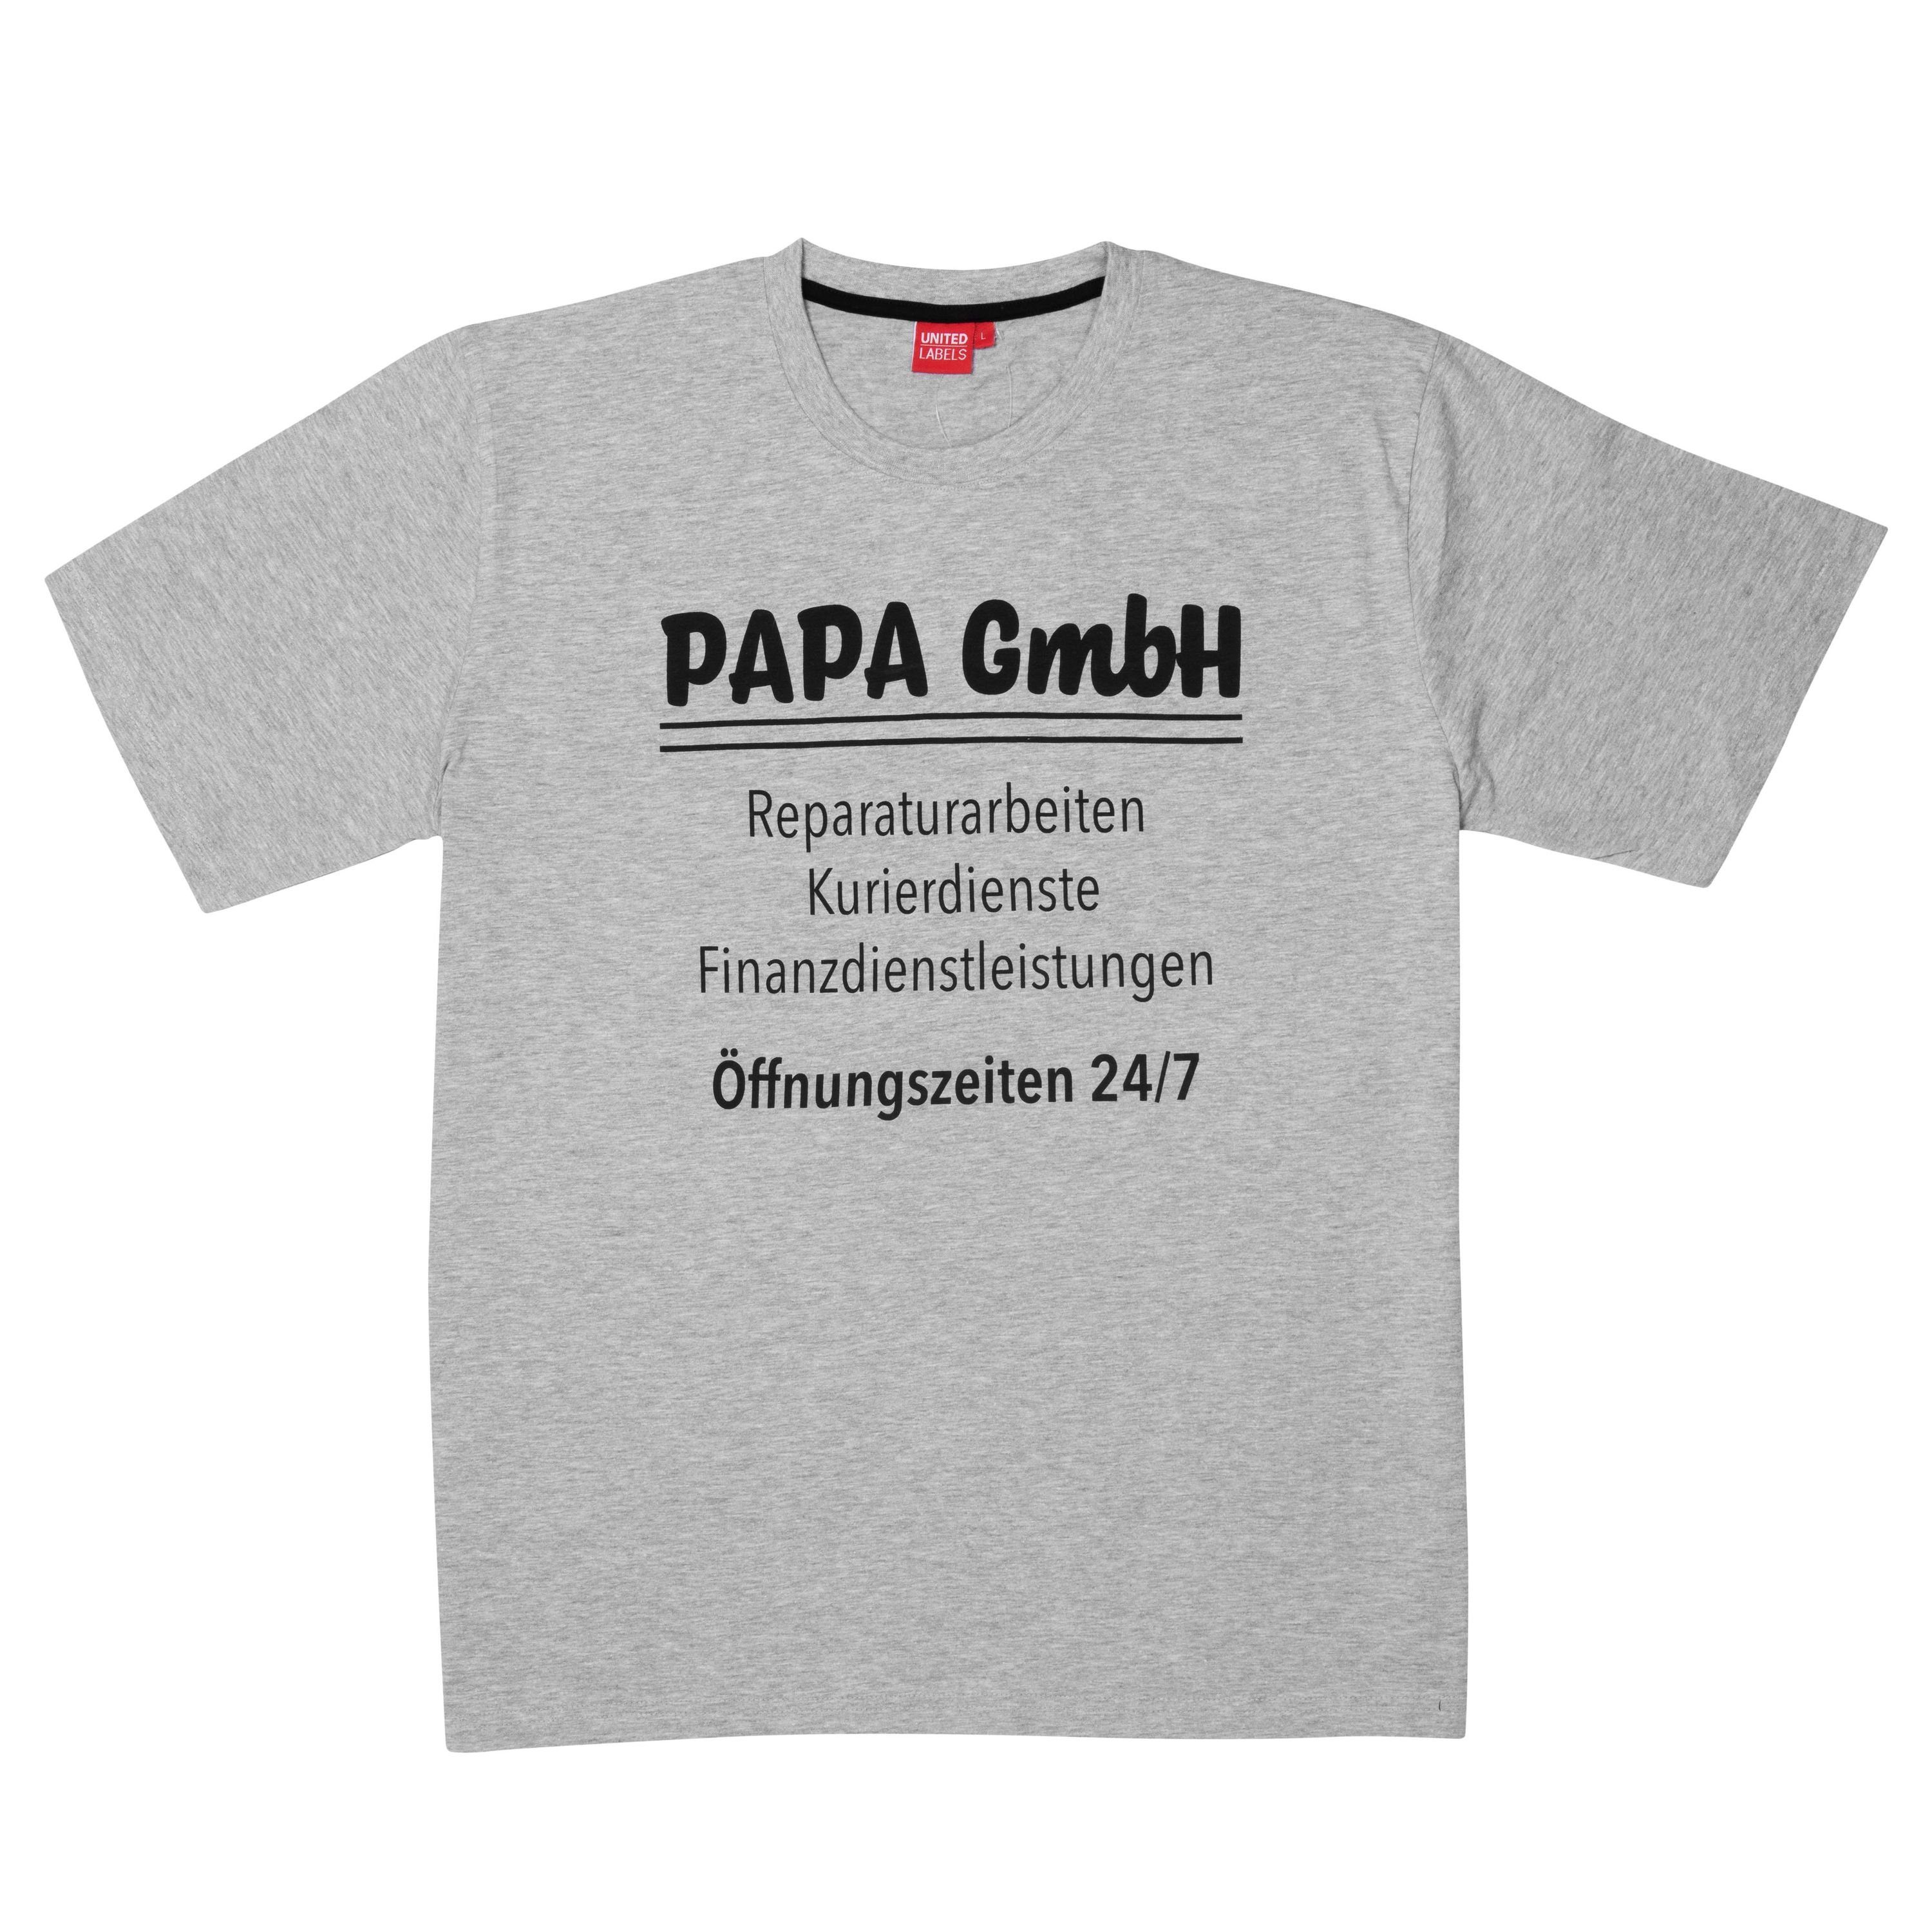 United Labels® Vater für Herren - Shirt Papa T-Shirt Oberteil Grau T-Shirt GmbH